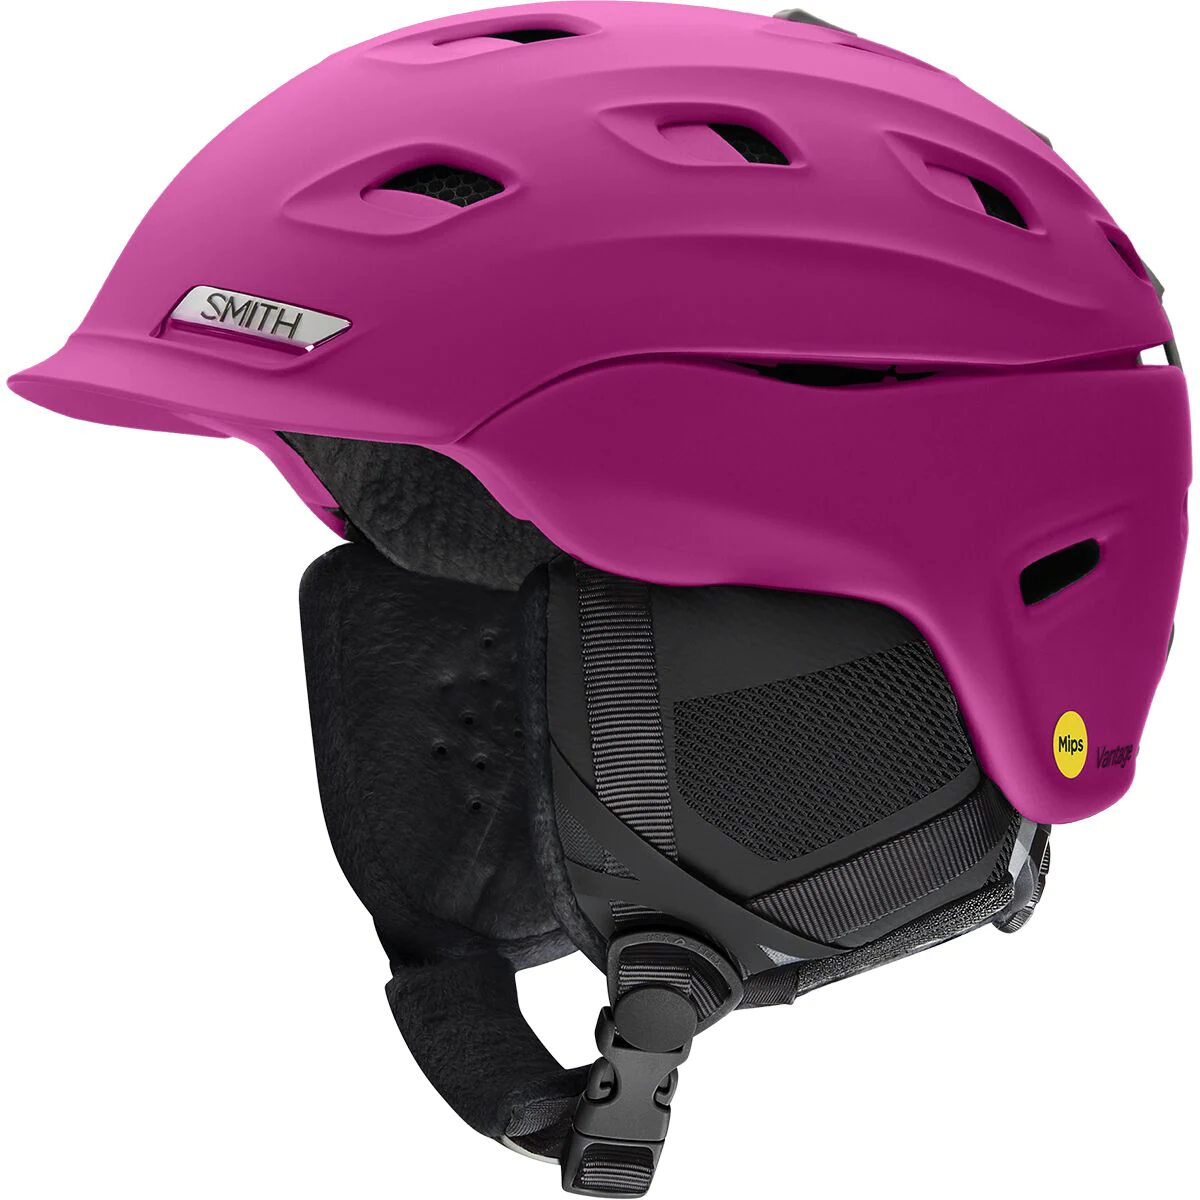 best looking snowboard helmets: Smith vantage mips for women